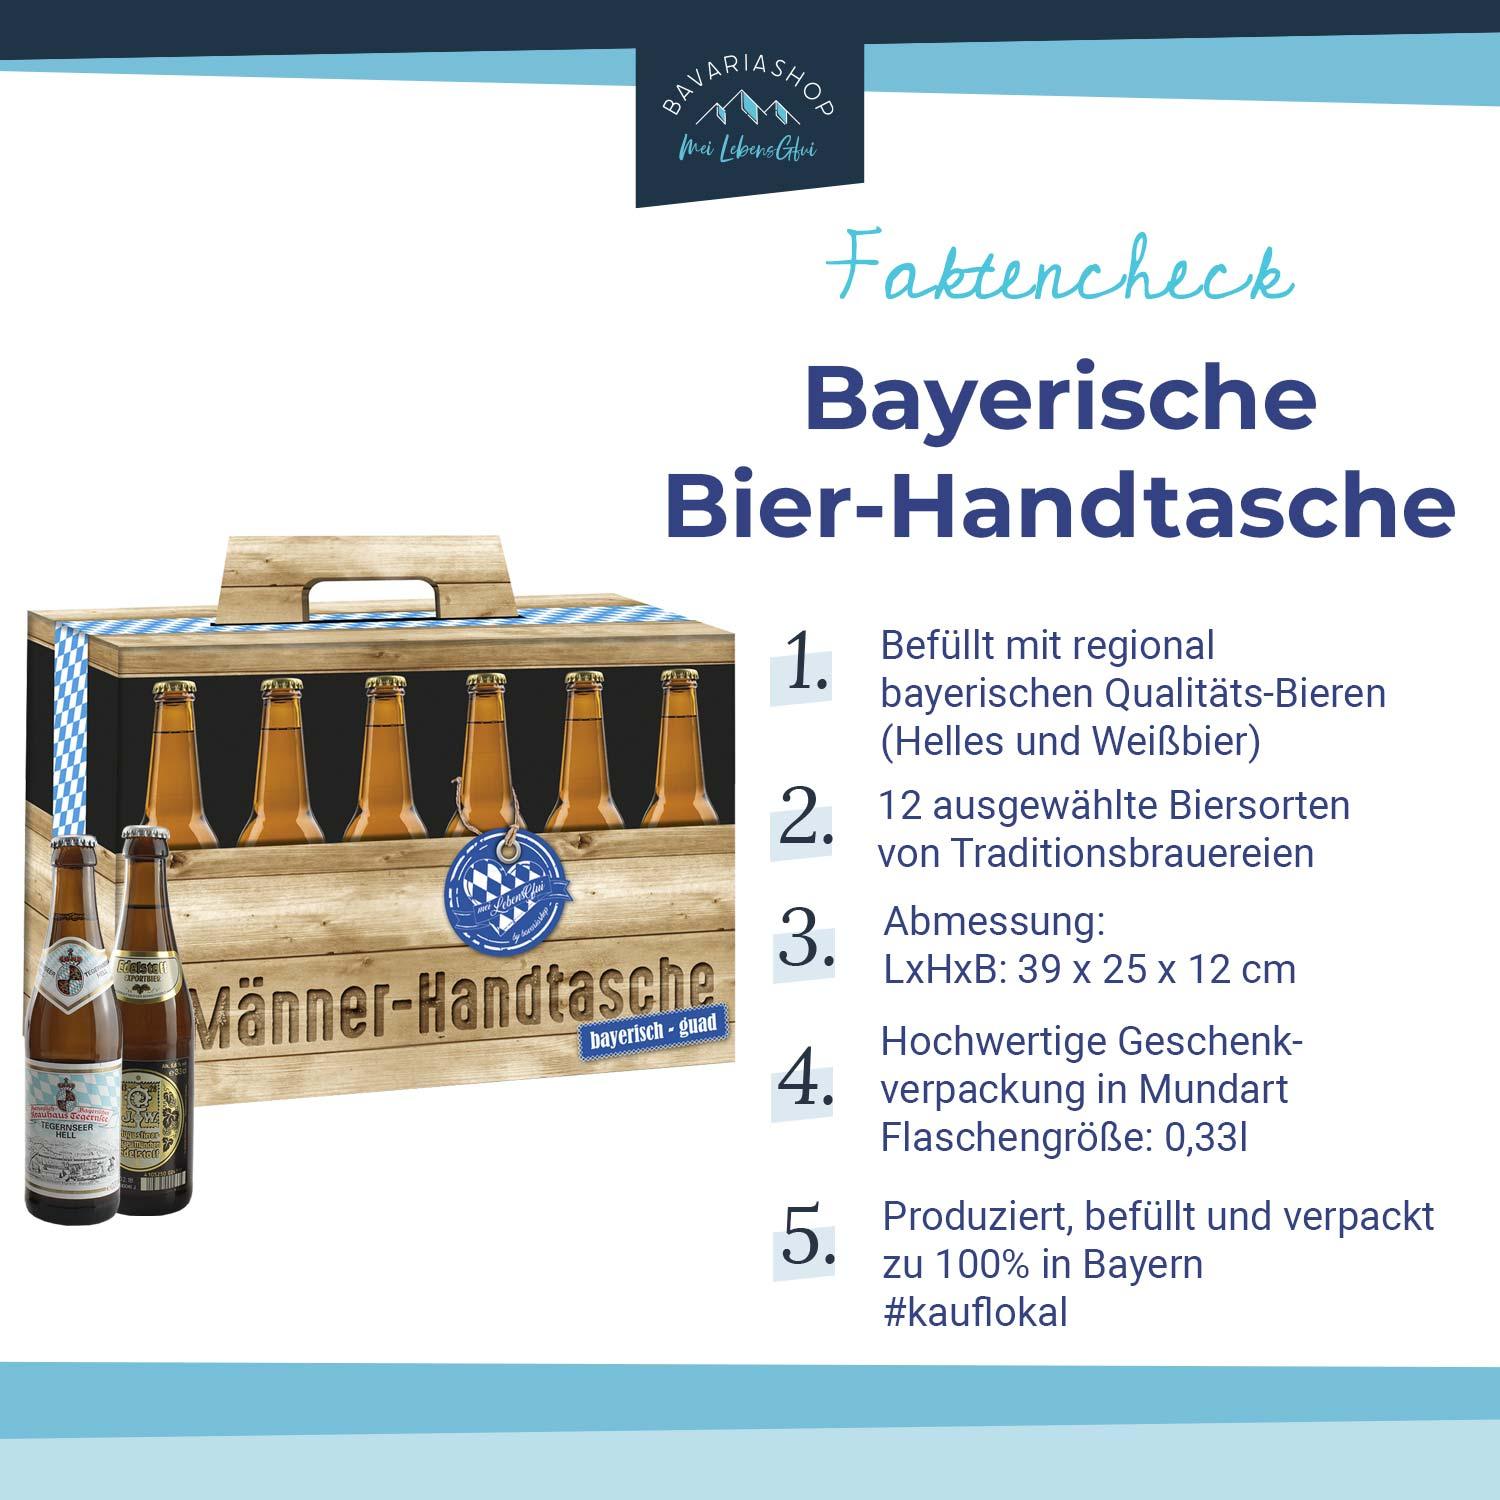 Bier-Geschenk "Männer-Handtasche" - bavariashop - mei LebensGfui